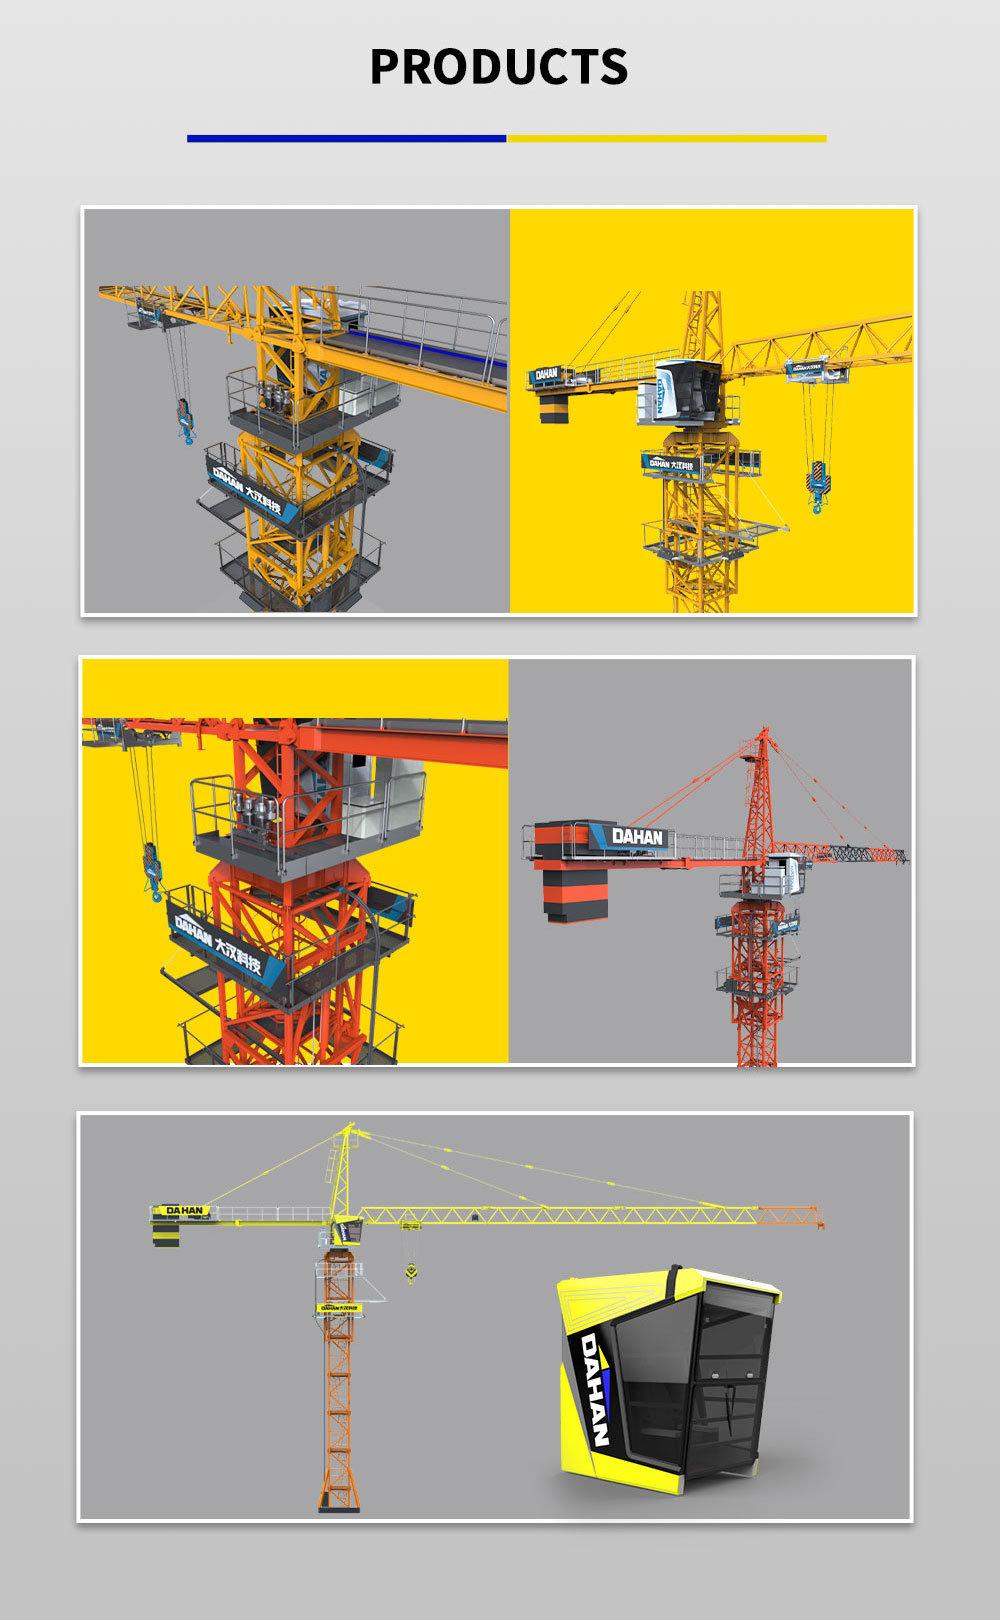 Factory Direct Sales Dahan High-Quality Tower Crane (5Ton-80Ton)